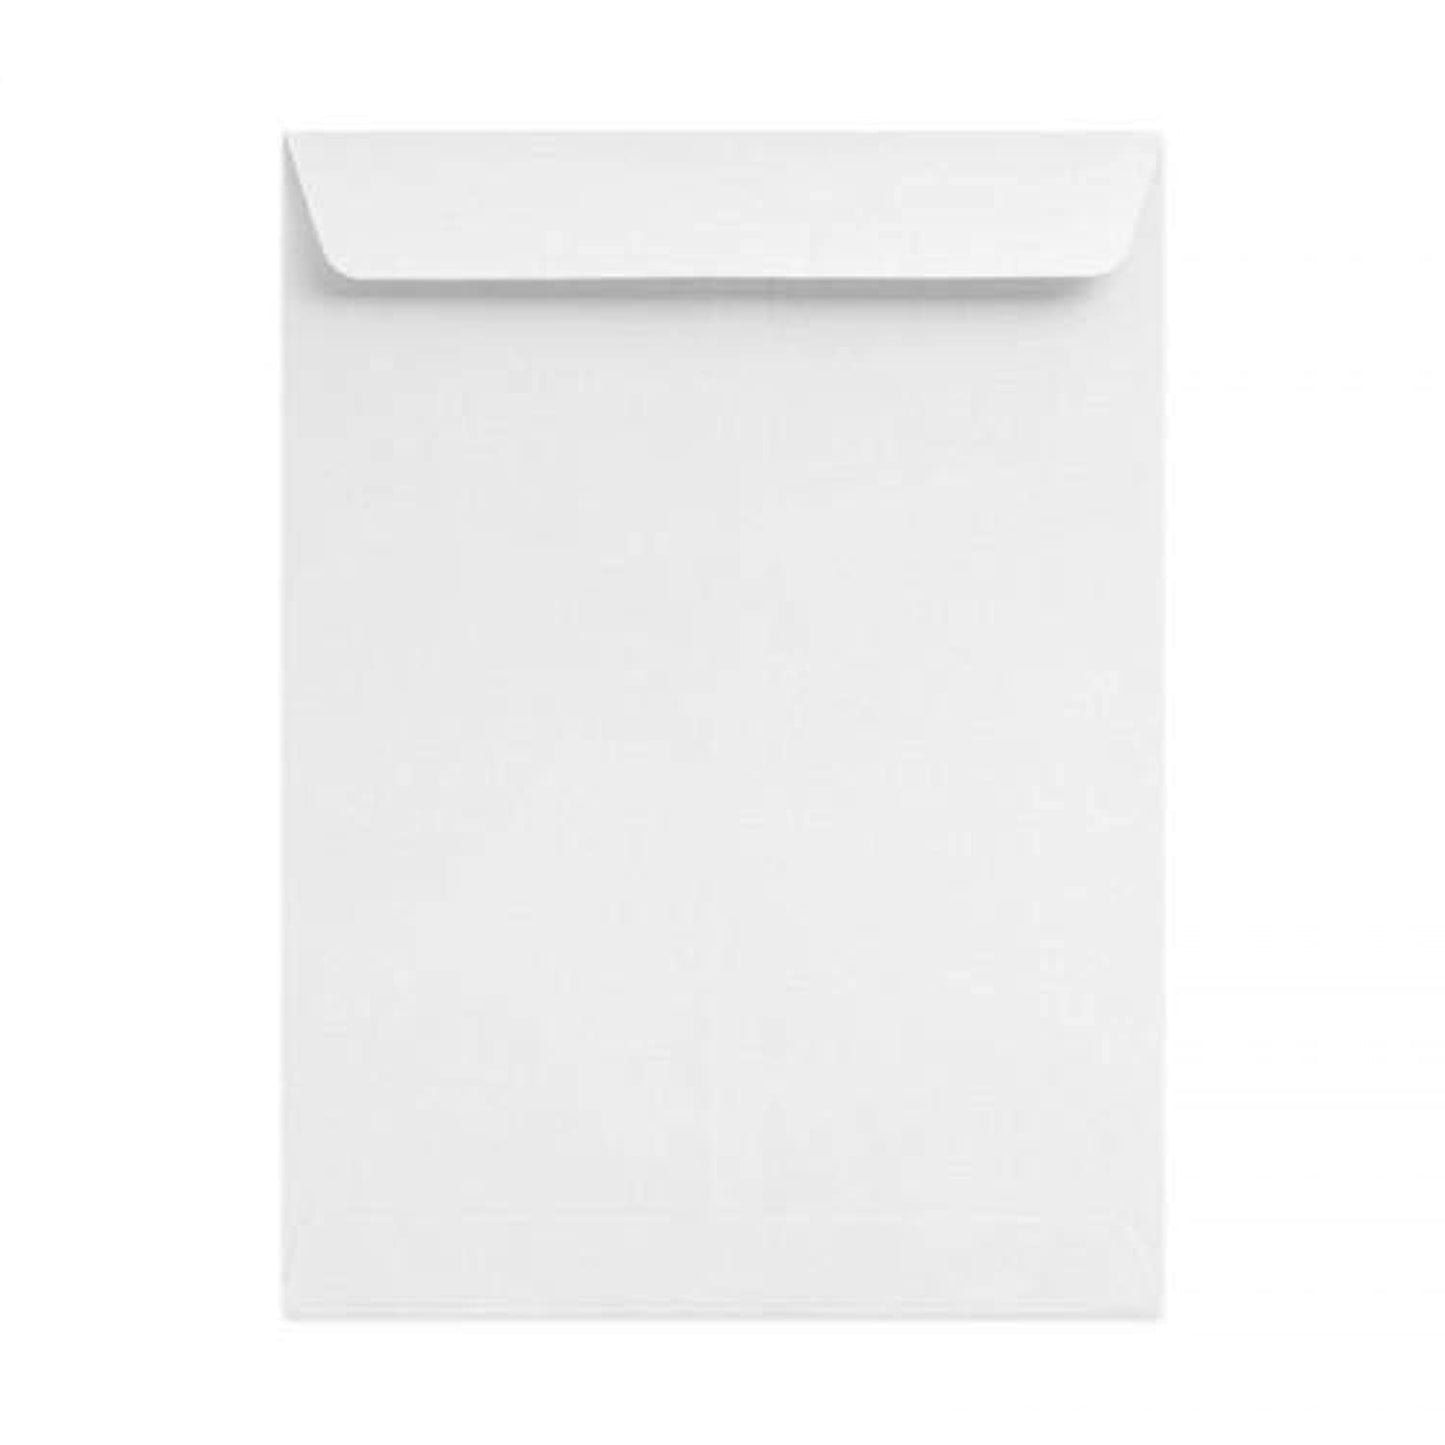 A4 envelope White Color || A4  اظرف لون ابيض حجم